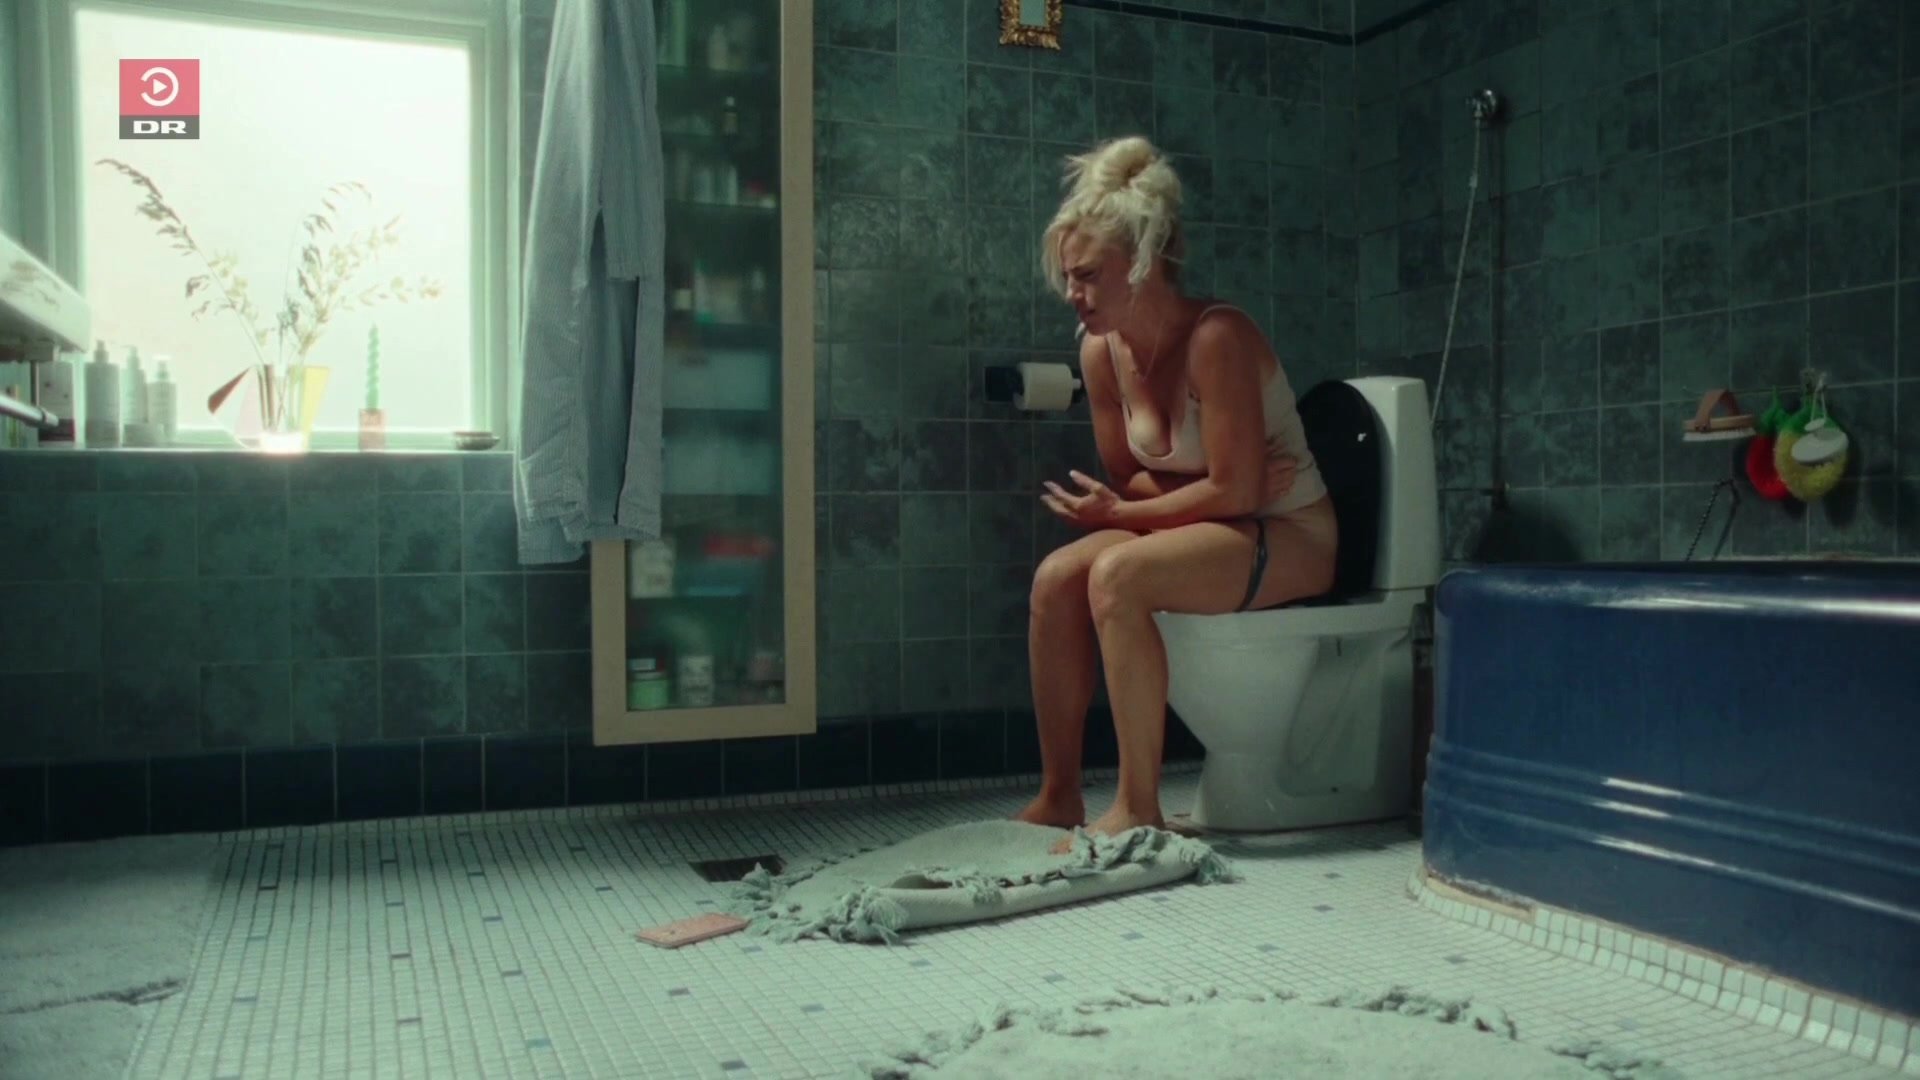 Hot girl toilet diarrhea farting scene - video 9